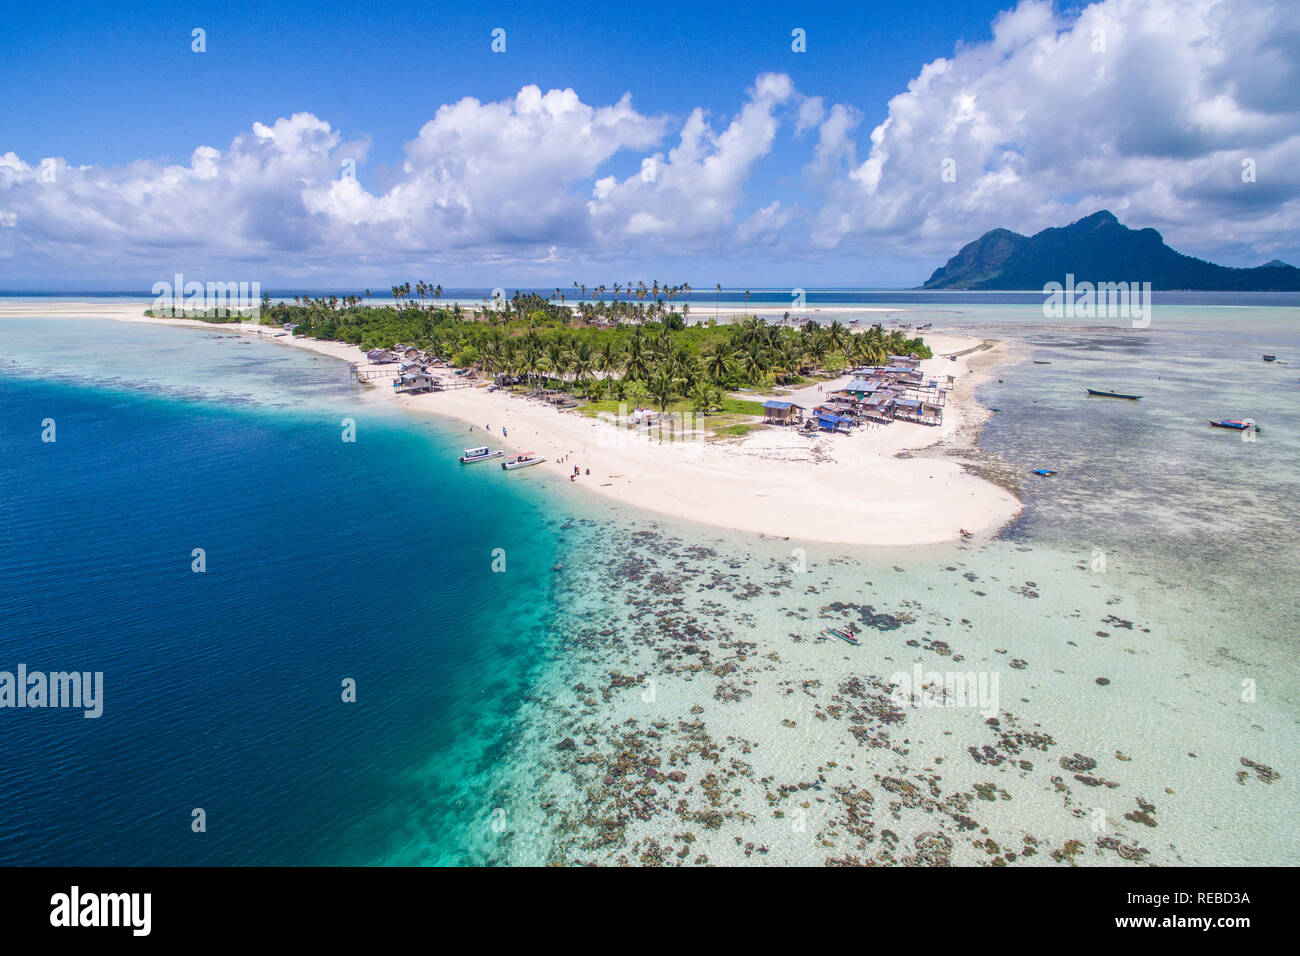 Vista aerea di isola Maiga panorama, splendida laguna blu e barriera corallina. Foto Stock